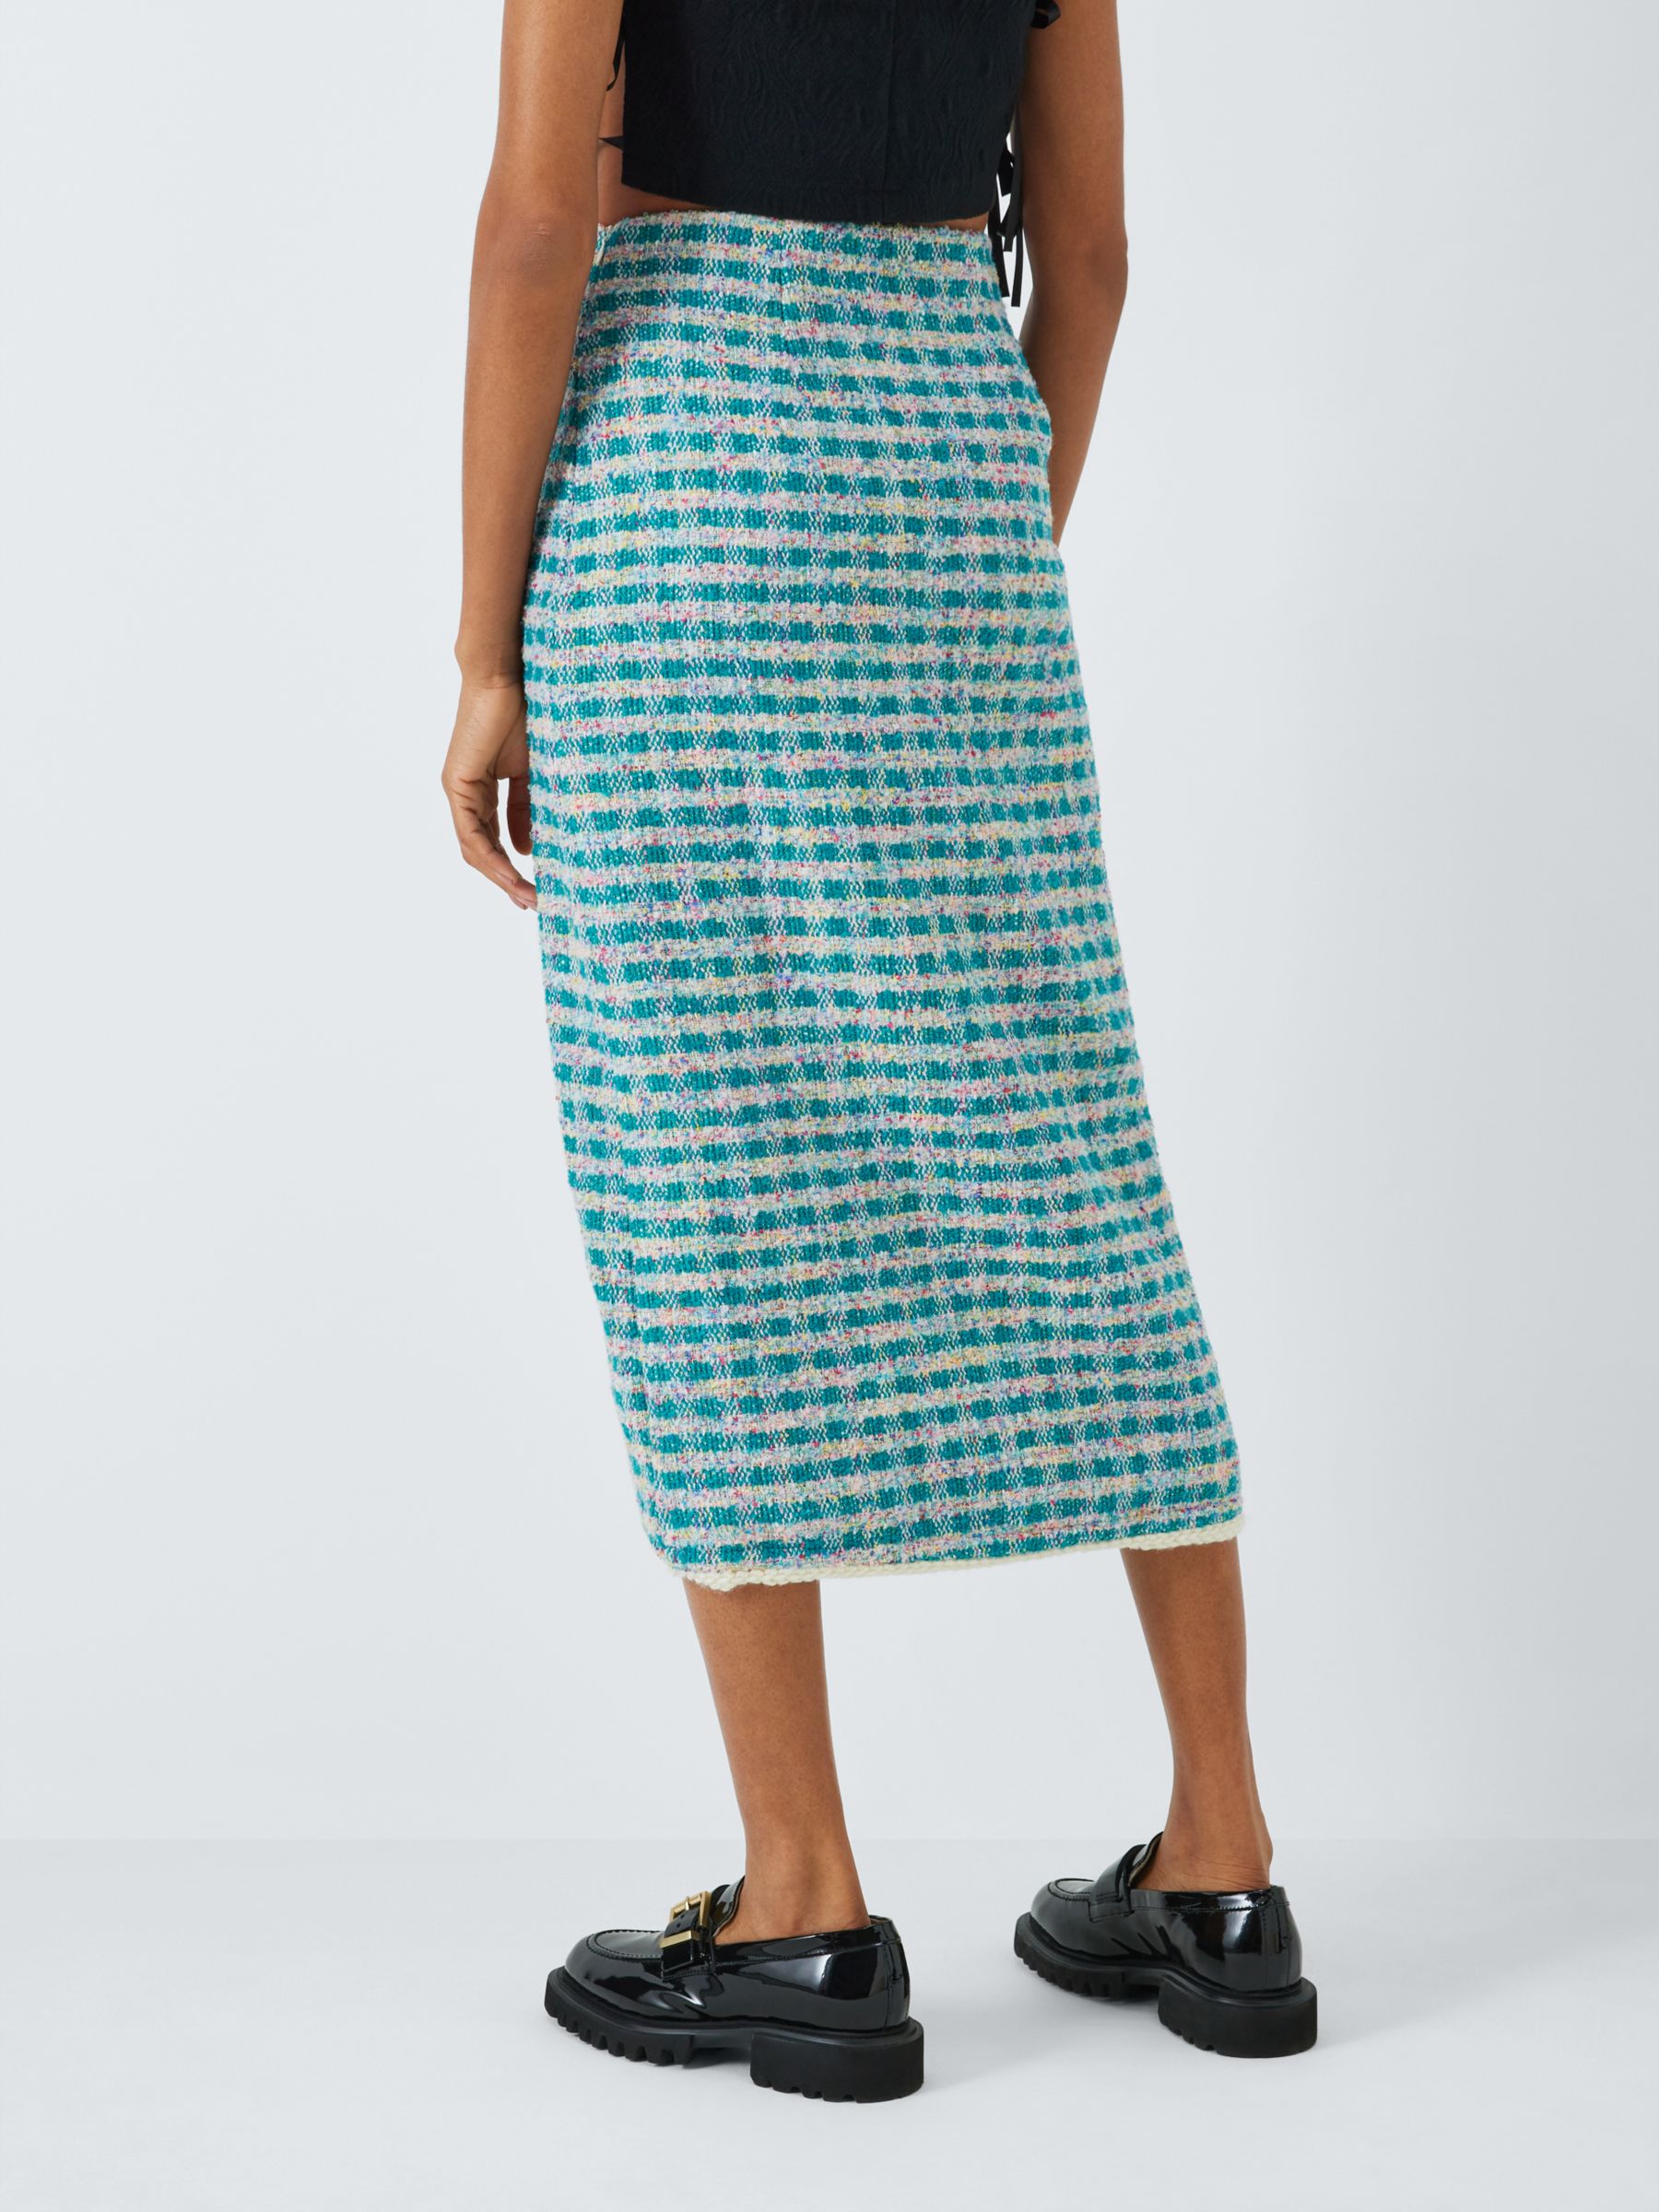 Sister Jane Dream Check Tweed Midi Skirt, Turquoise/Multi, 8